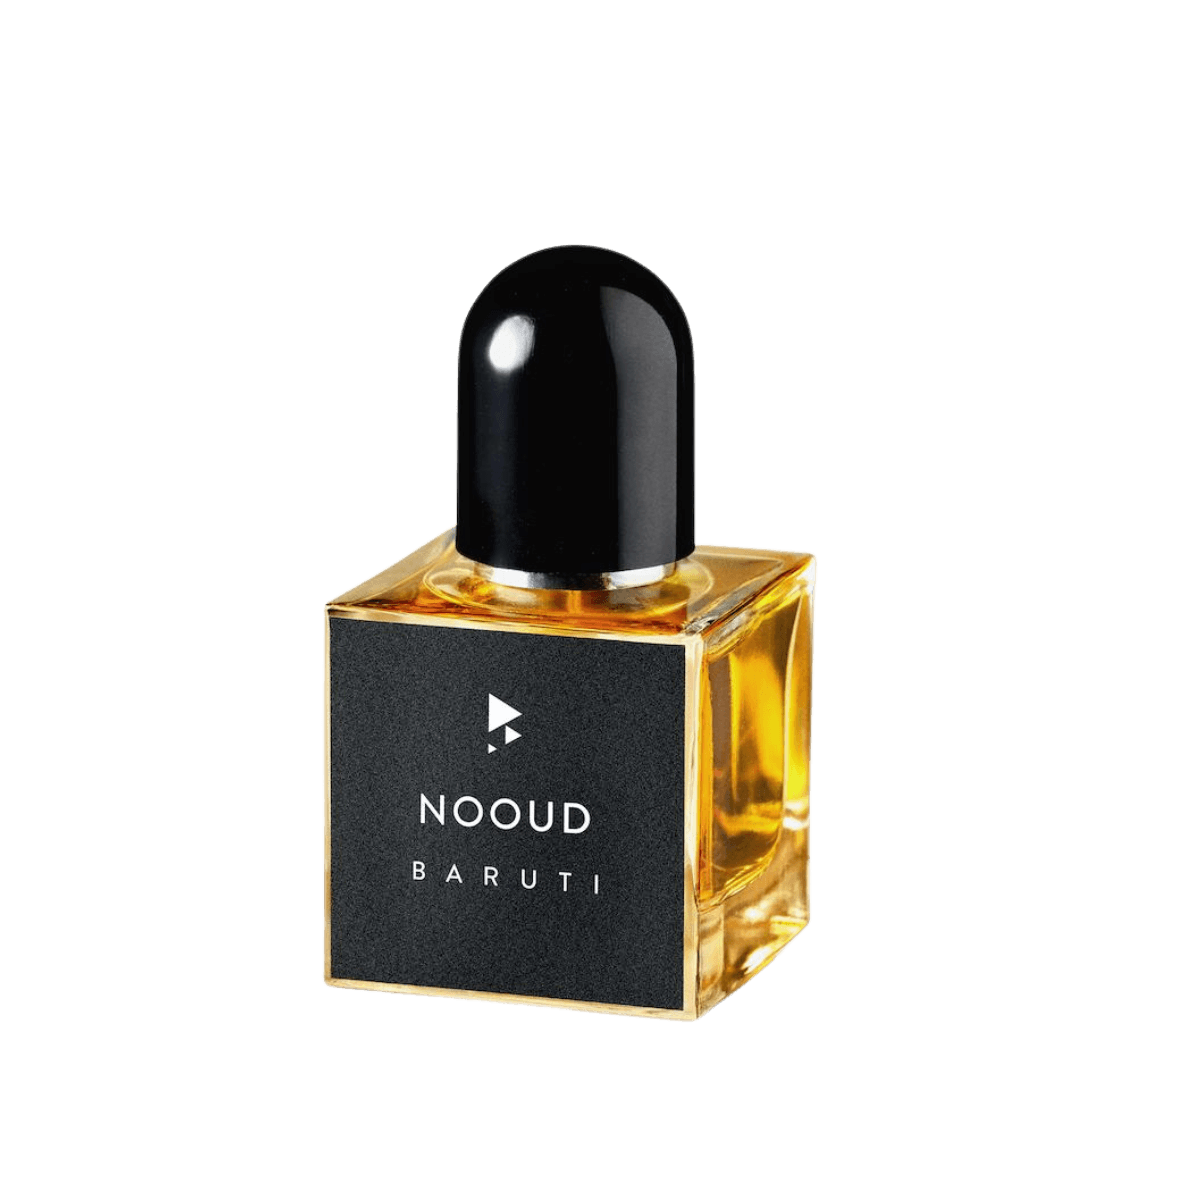 Image of the perfume NOOUD by the brand Baruti